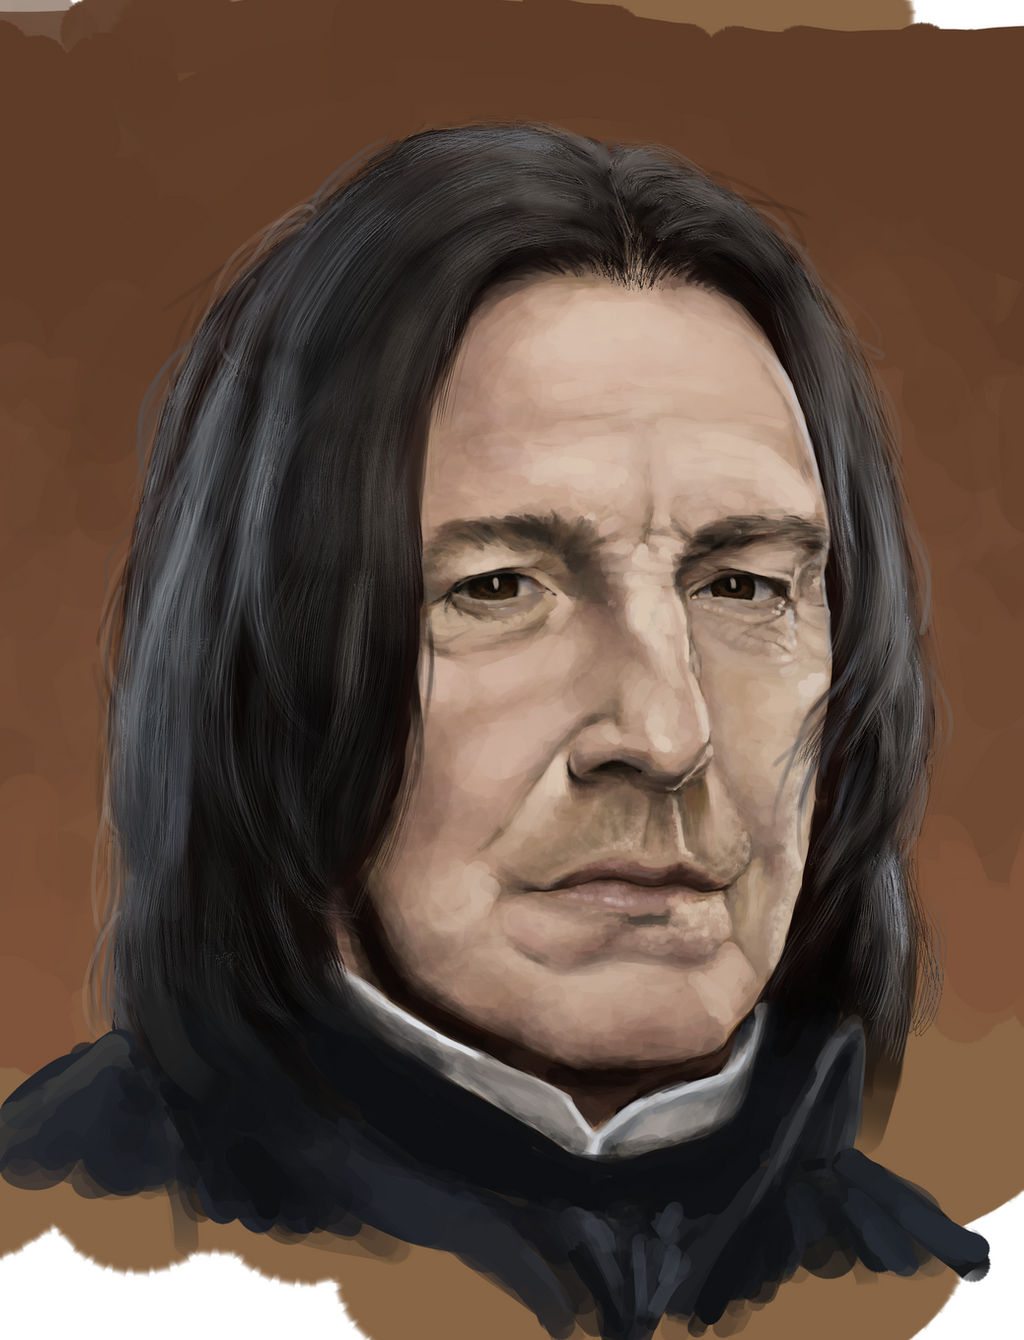 Severus Snape portrait by JamesTurnerArt on DeviantArt